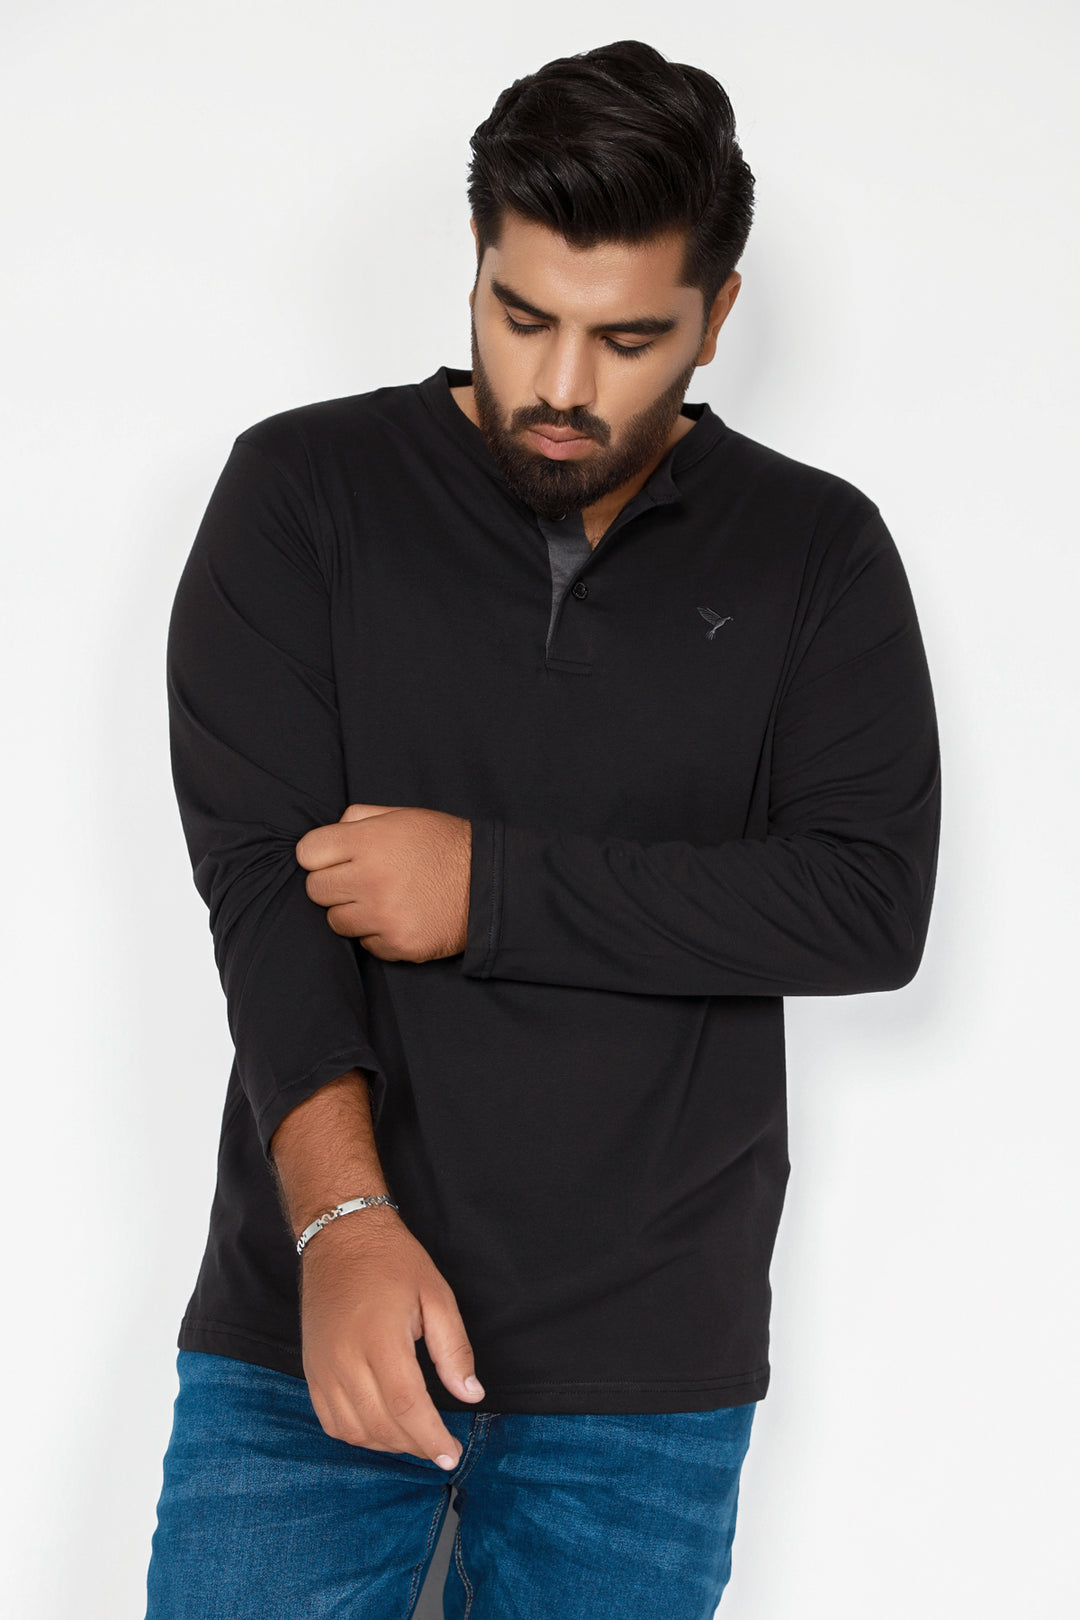 Rustic Black Full Sleeves T-Shirt  (Plus Size) - S22 - MT0188P